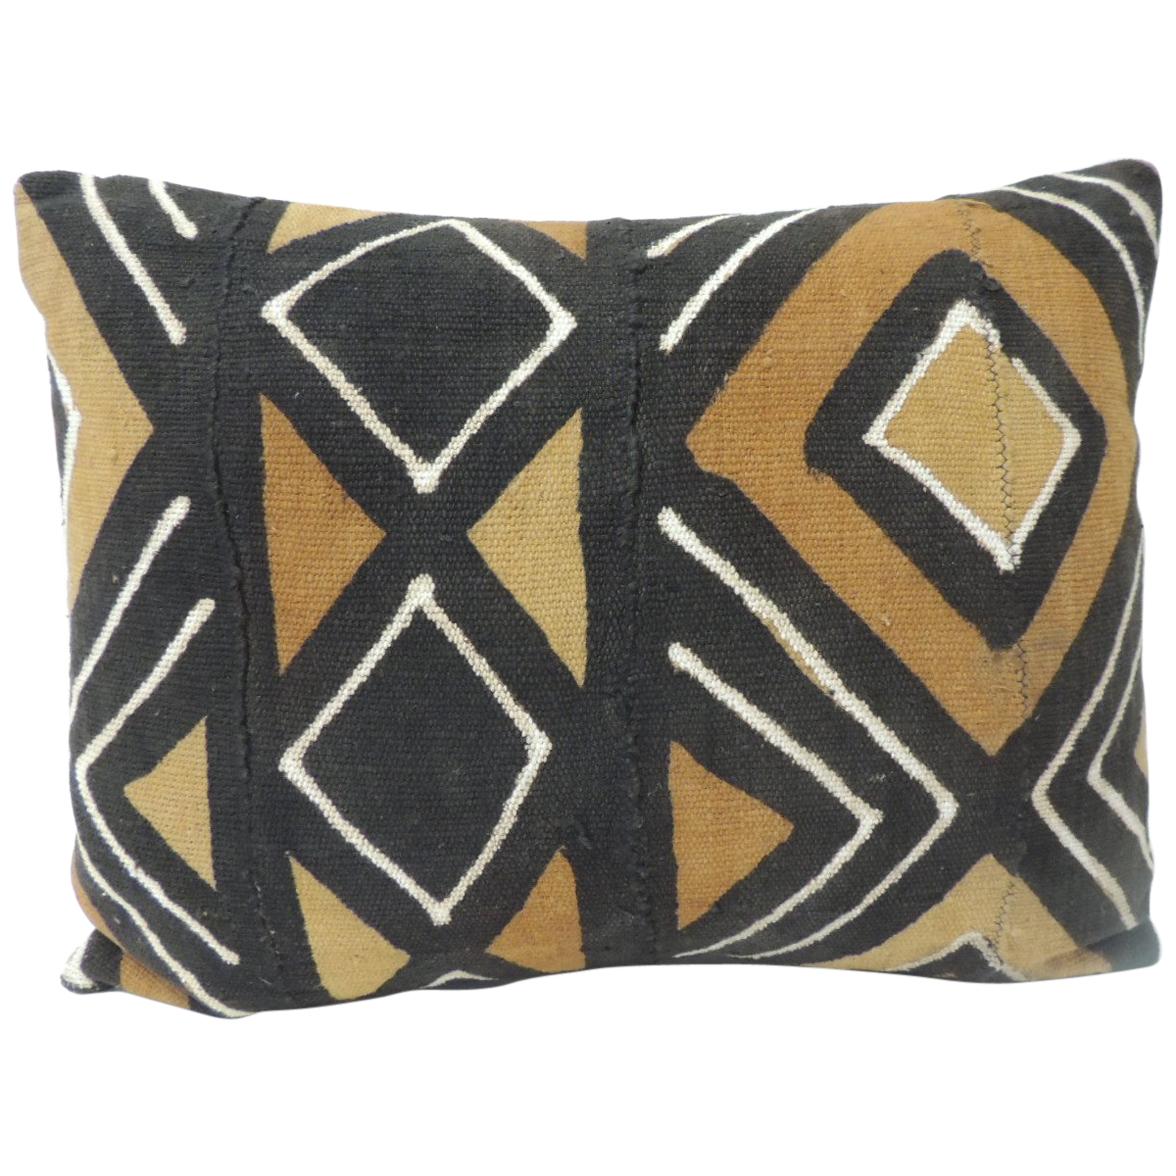 Vintage Graphic African Artisanal Textile Mudcloth Decorative Bolster Pillow